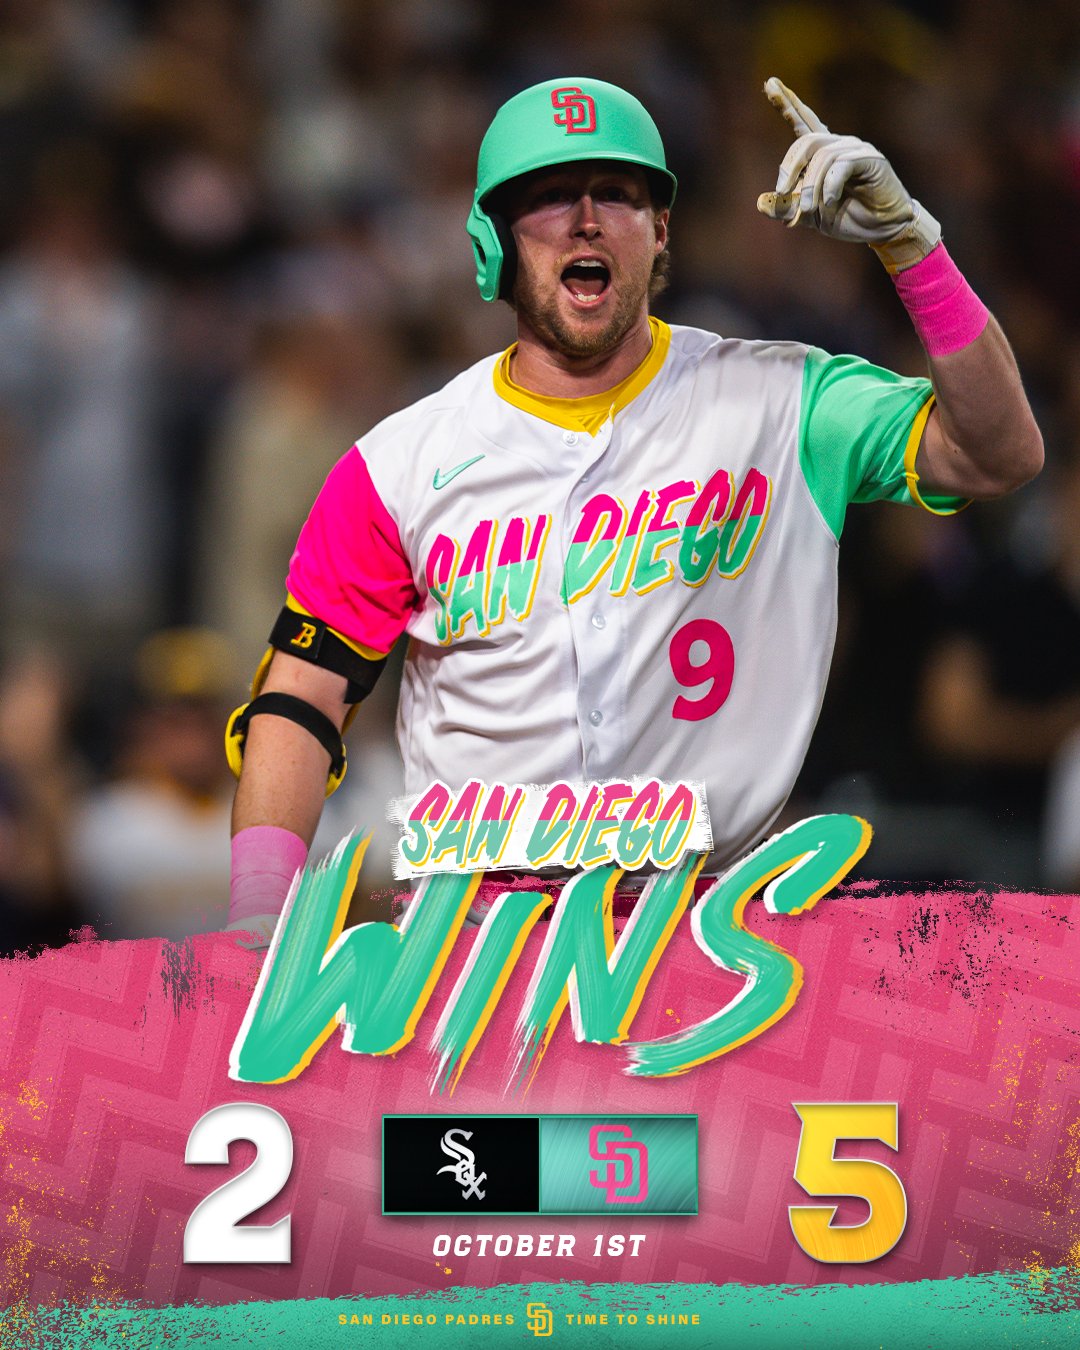 San Diego Padres on X: That was one fun night. #TimeToShine